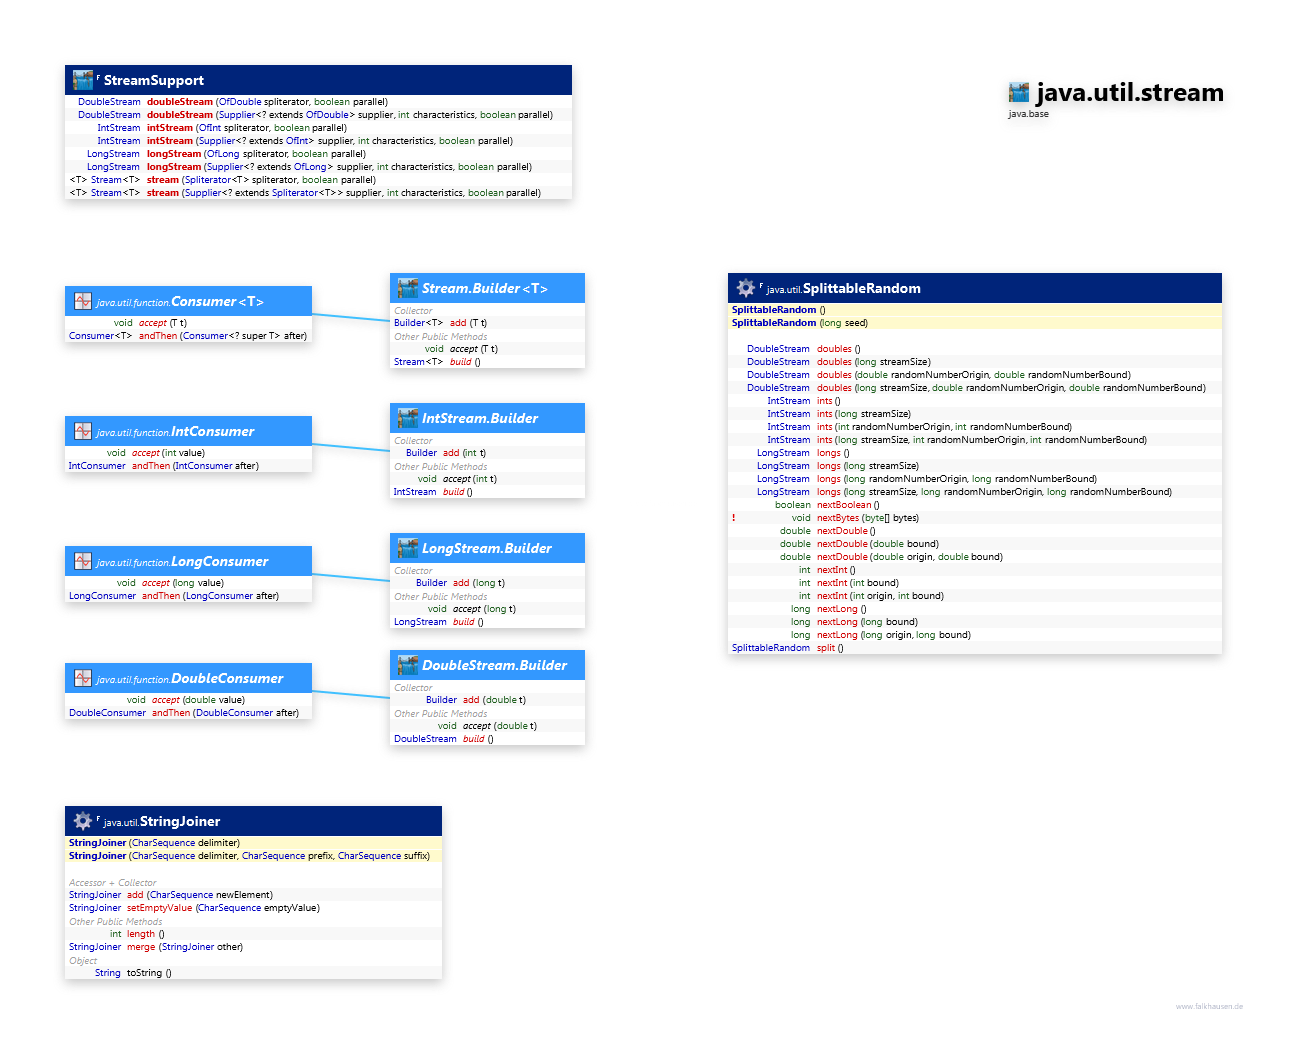 java.util.stream StreamSupport class diagram and api documentation for Java 10